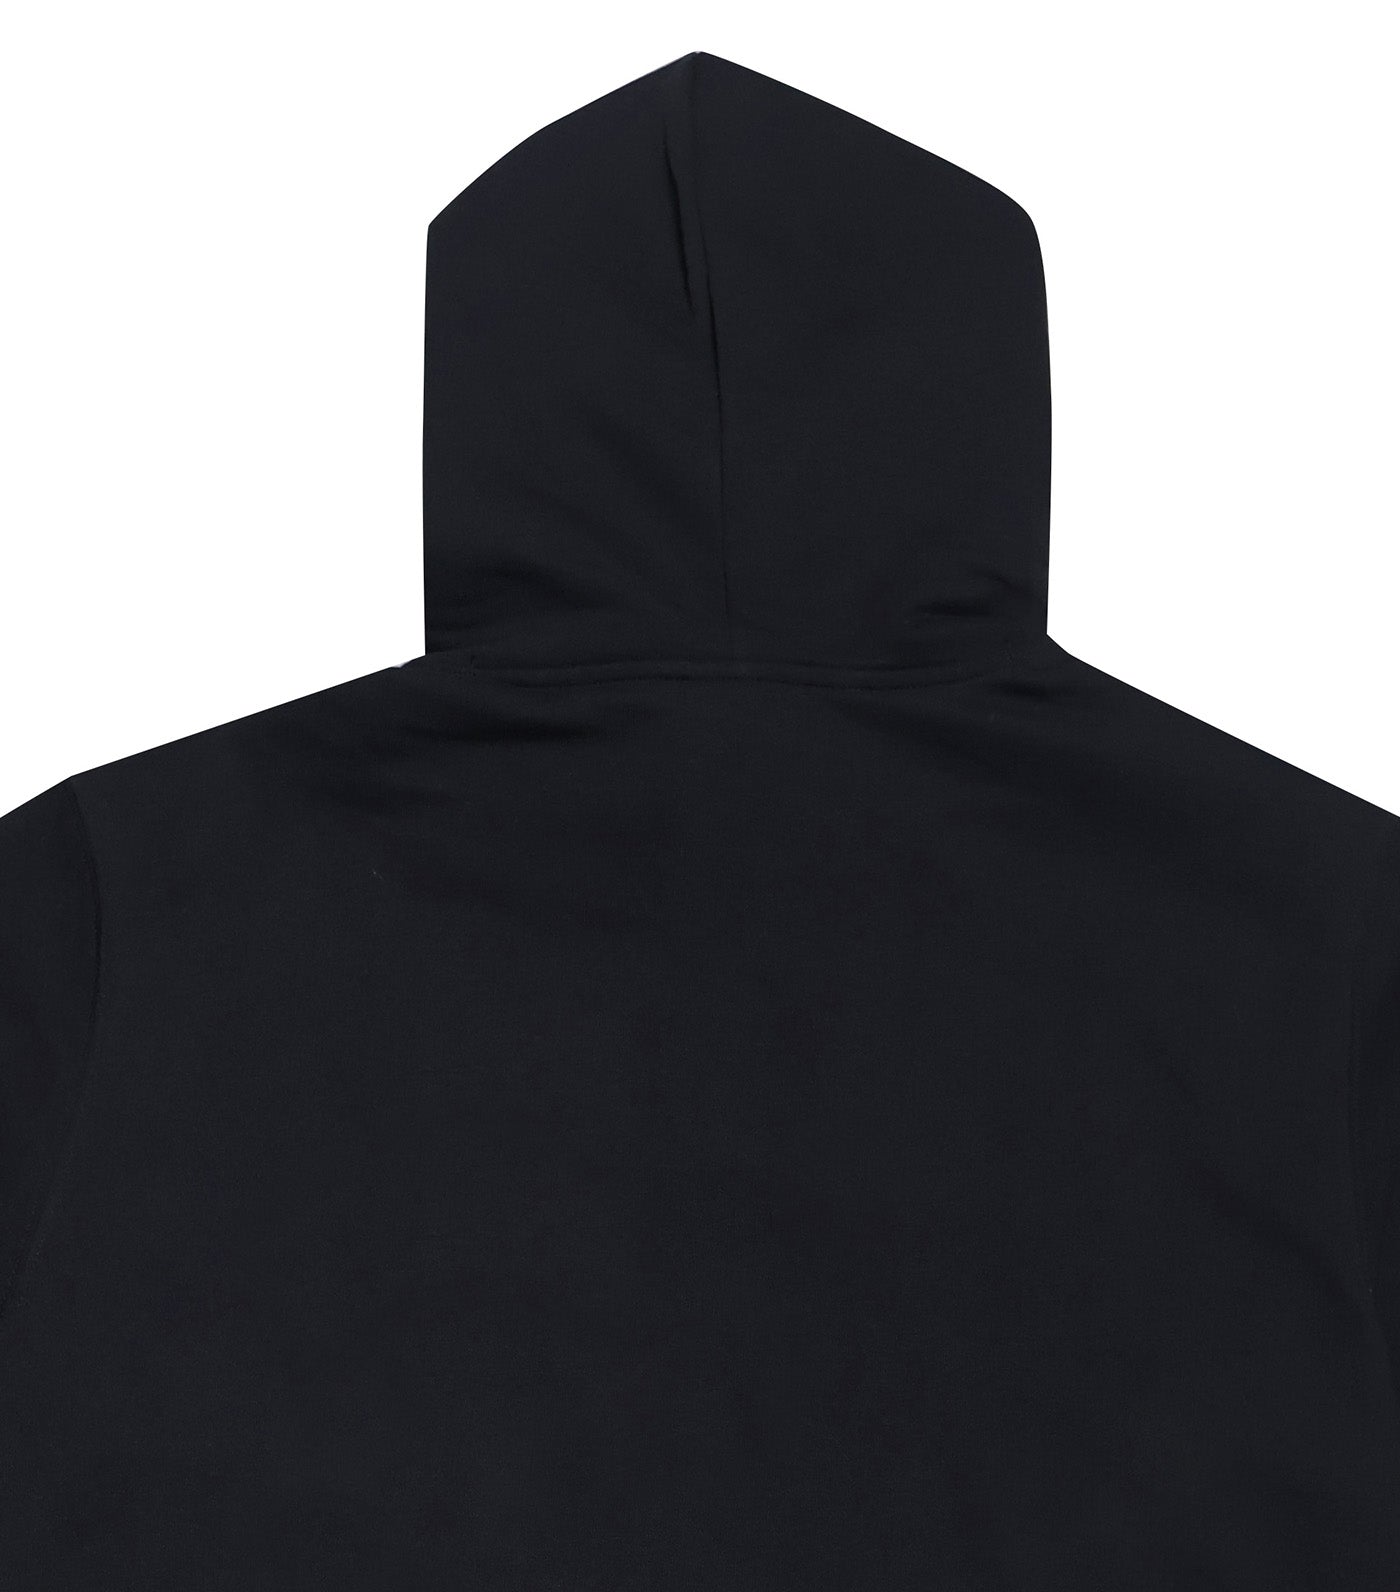 EU Line Hooded Sweatshirt Black